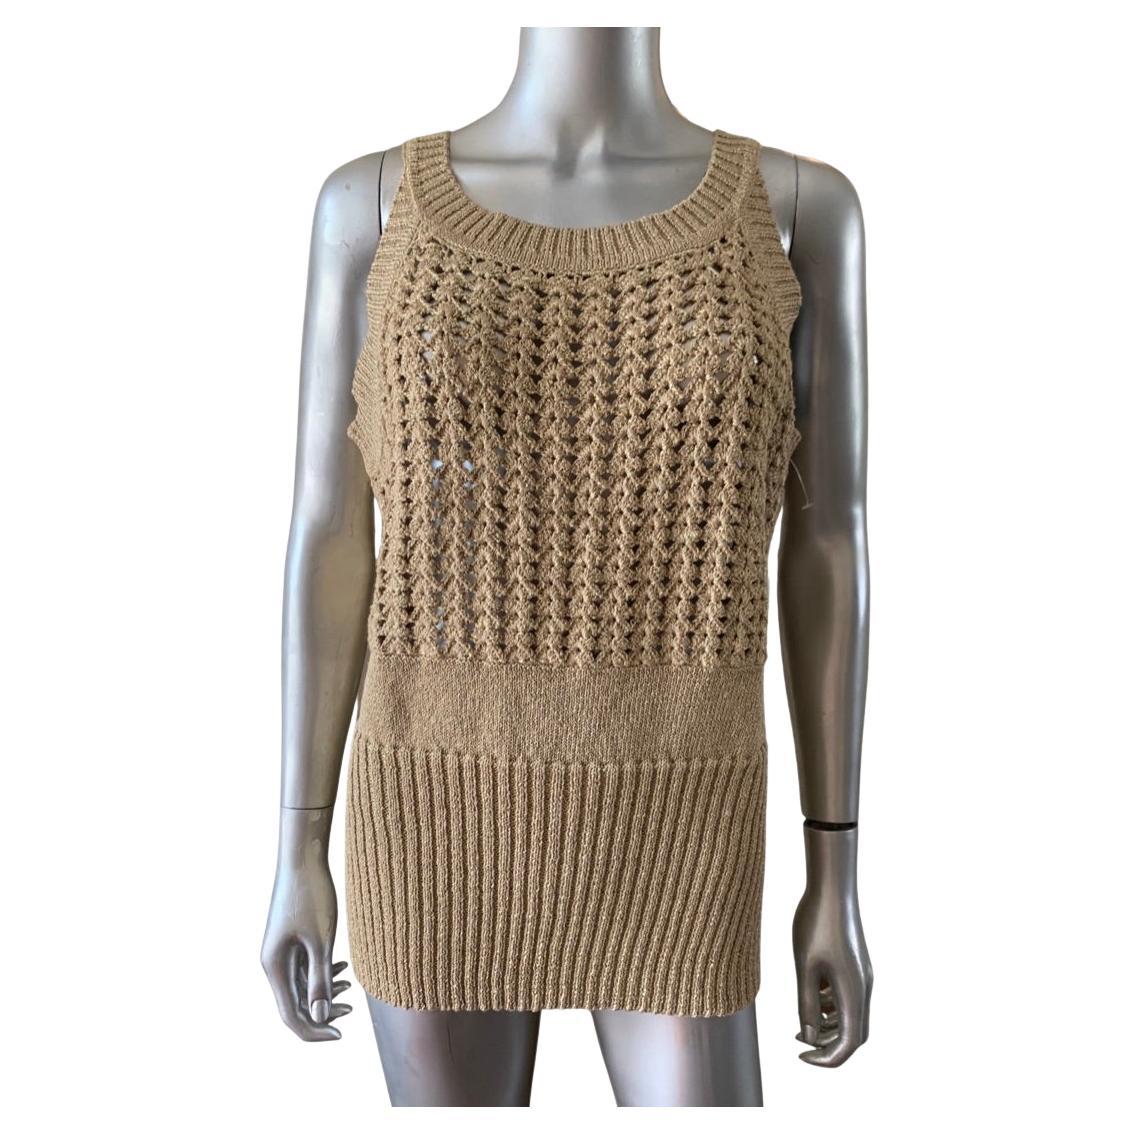 Escada Sport Metallic Gold Knit Sweater Sleeveless Pullover Top Size XL 